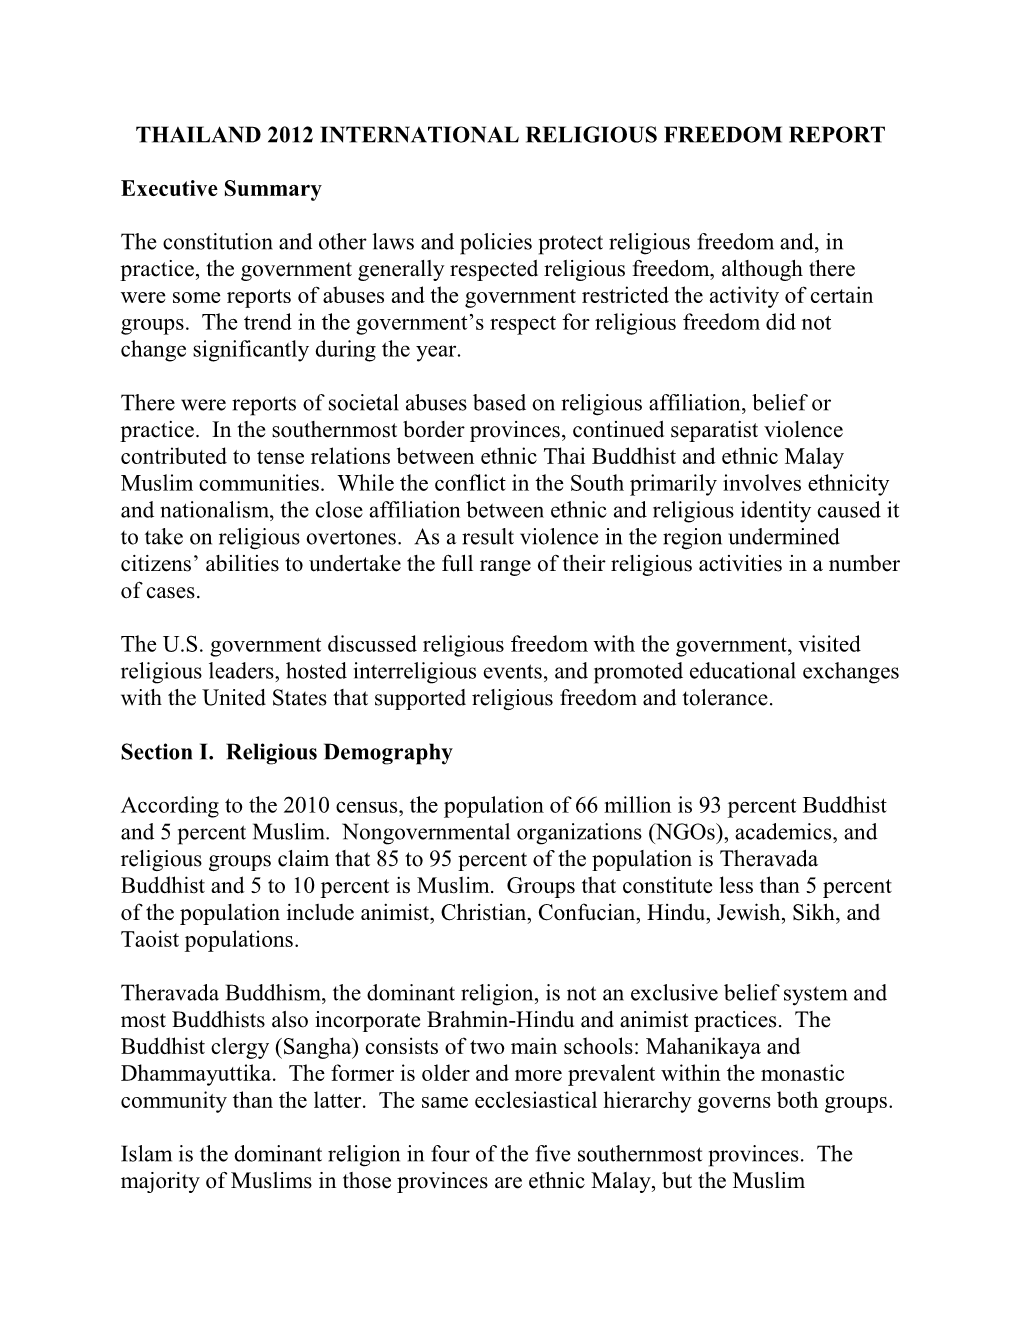 Thailand 2012 International Religious Freedom Report